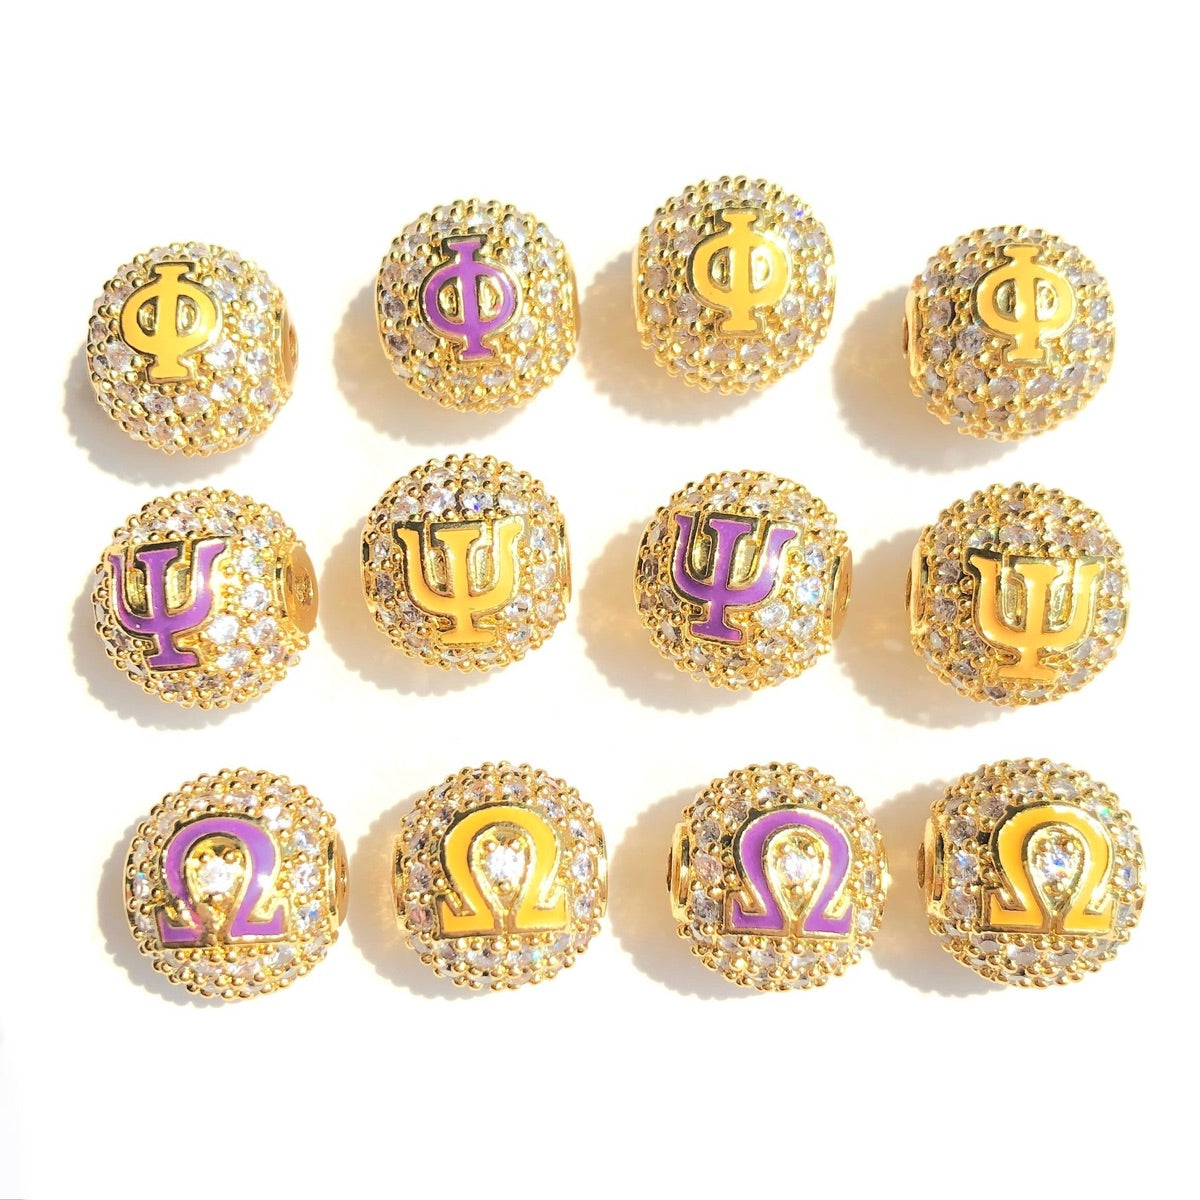 12pcs/lot 10mm Purple Yellow Enamel CZ Paved Greek Letter "Ψ", "Φ", "Ω" Ball Spacers Beads Mix Gold Letters 4 Letters Each CZ Paved Spacers 10mm Beads Ball Beads Greek Letters New Spacers Arrivals Charms Beads Beyond